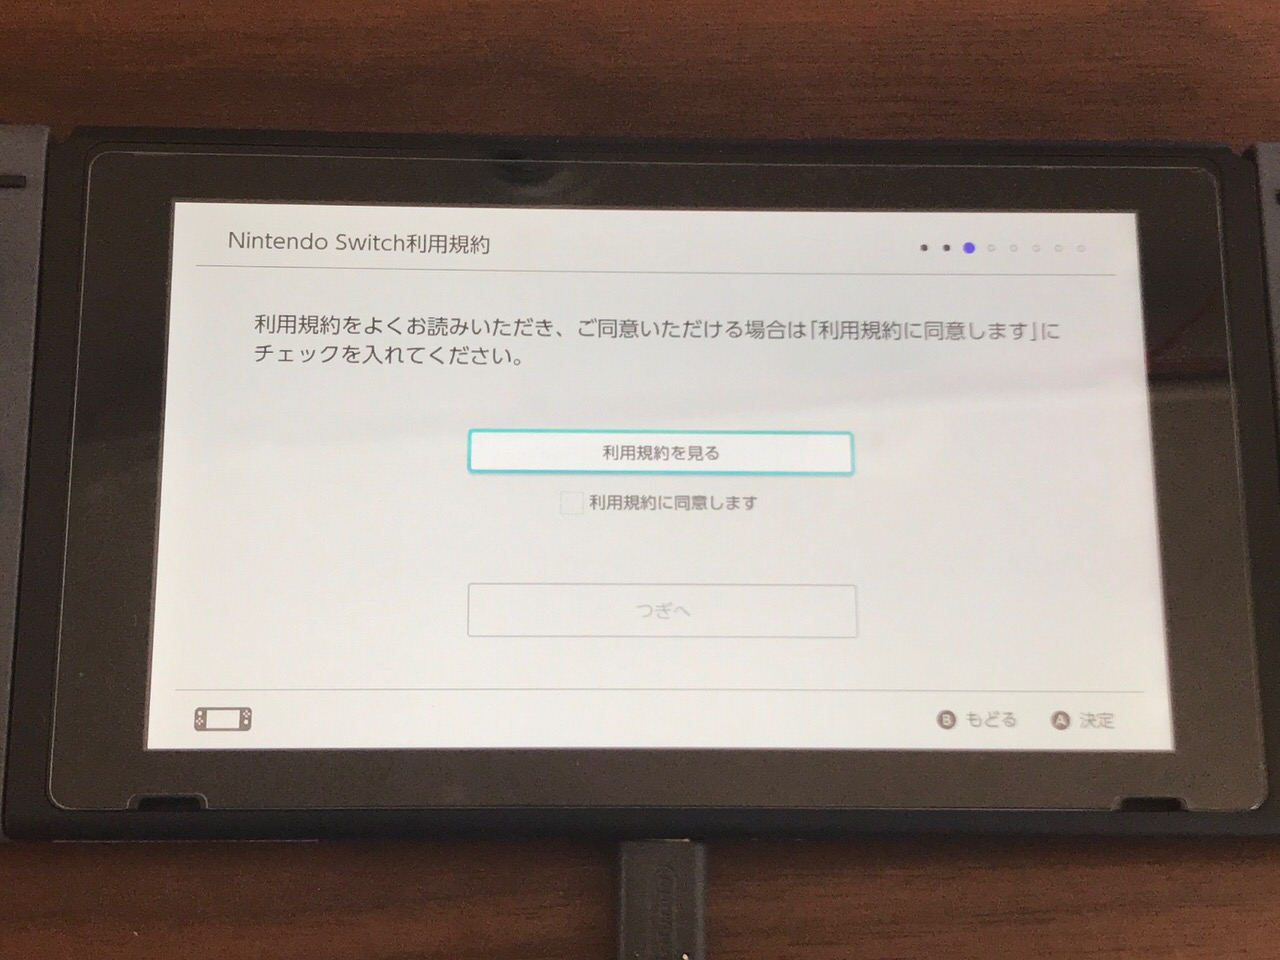 Nintendo switch setup 6758